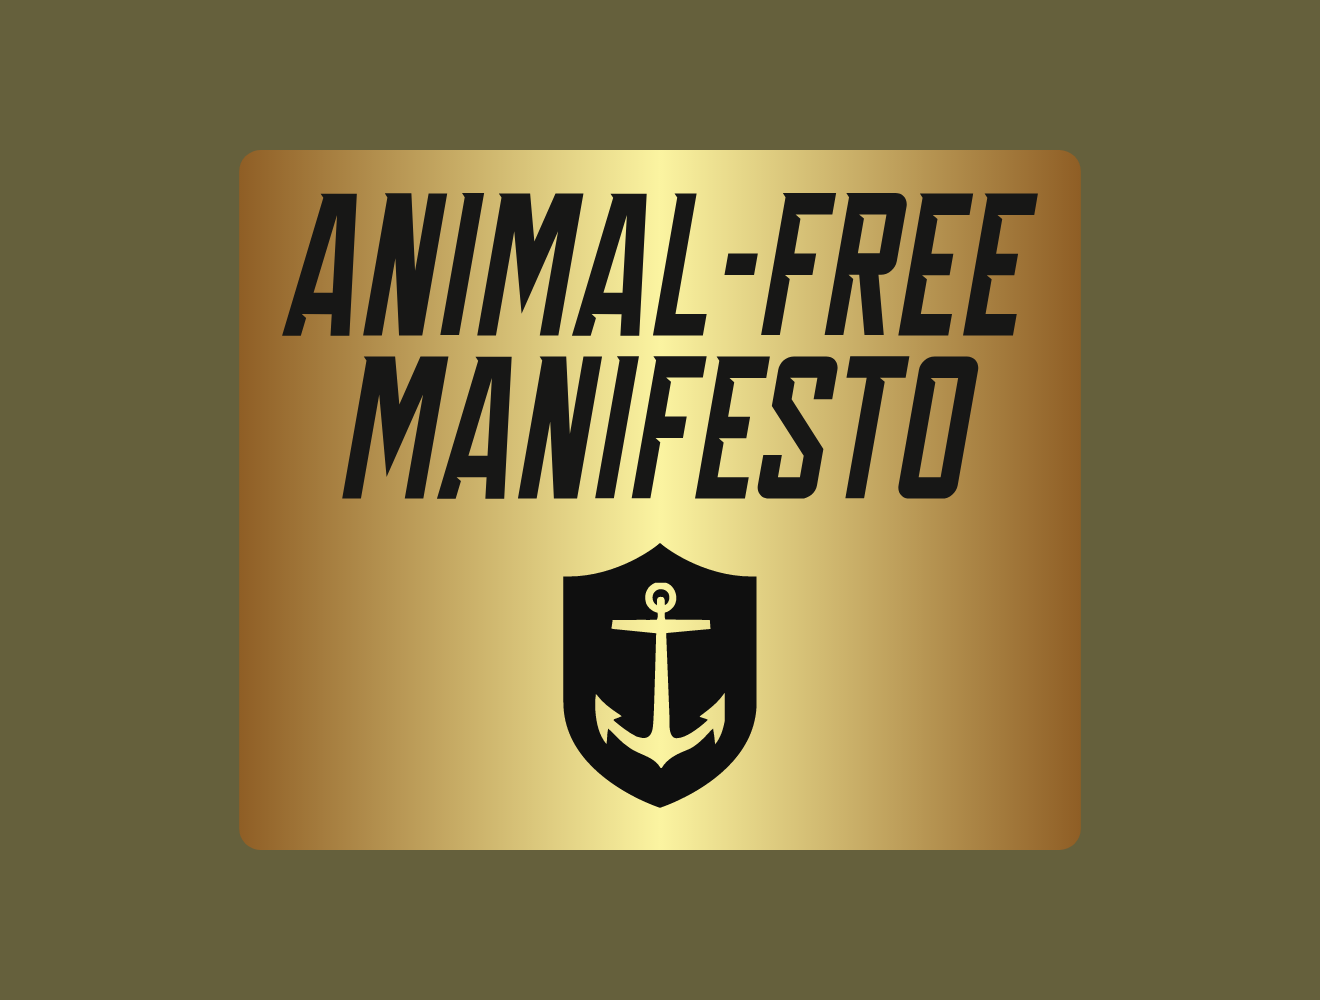 ANIMAL FREE MANIFESTO